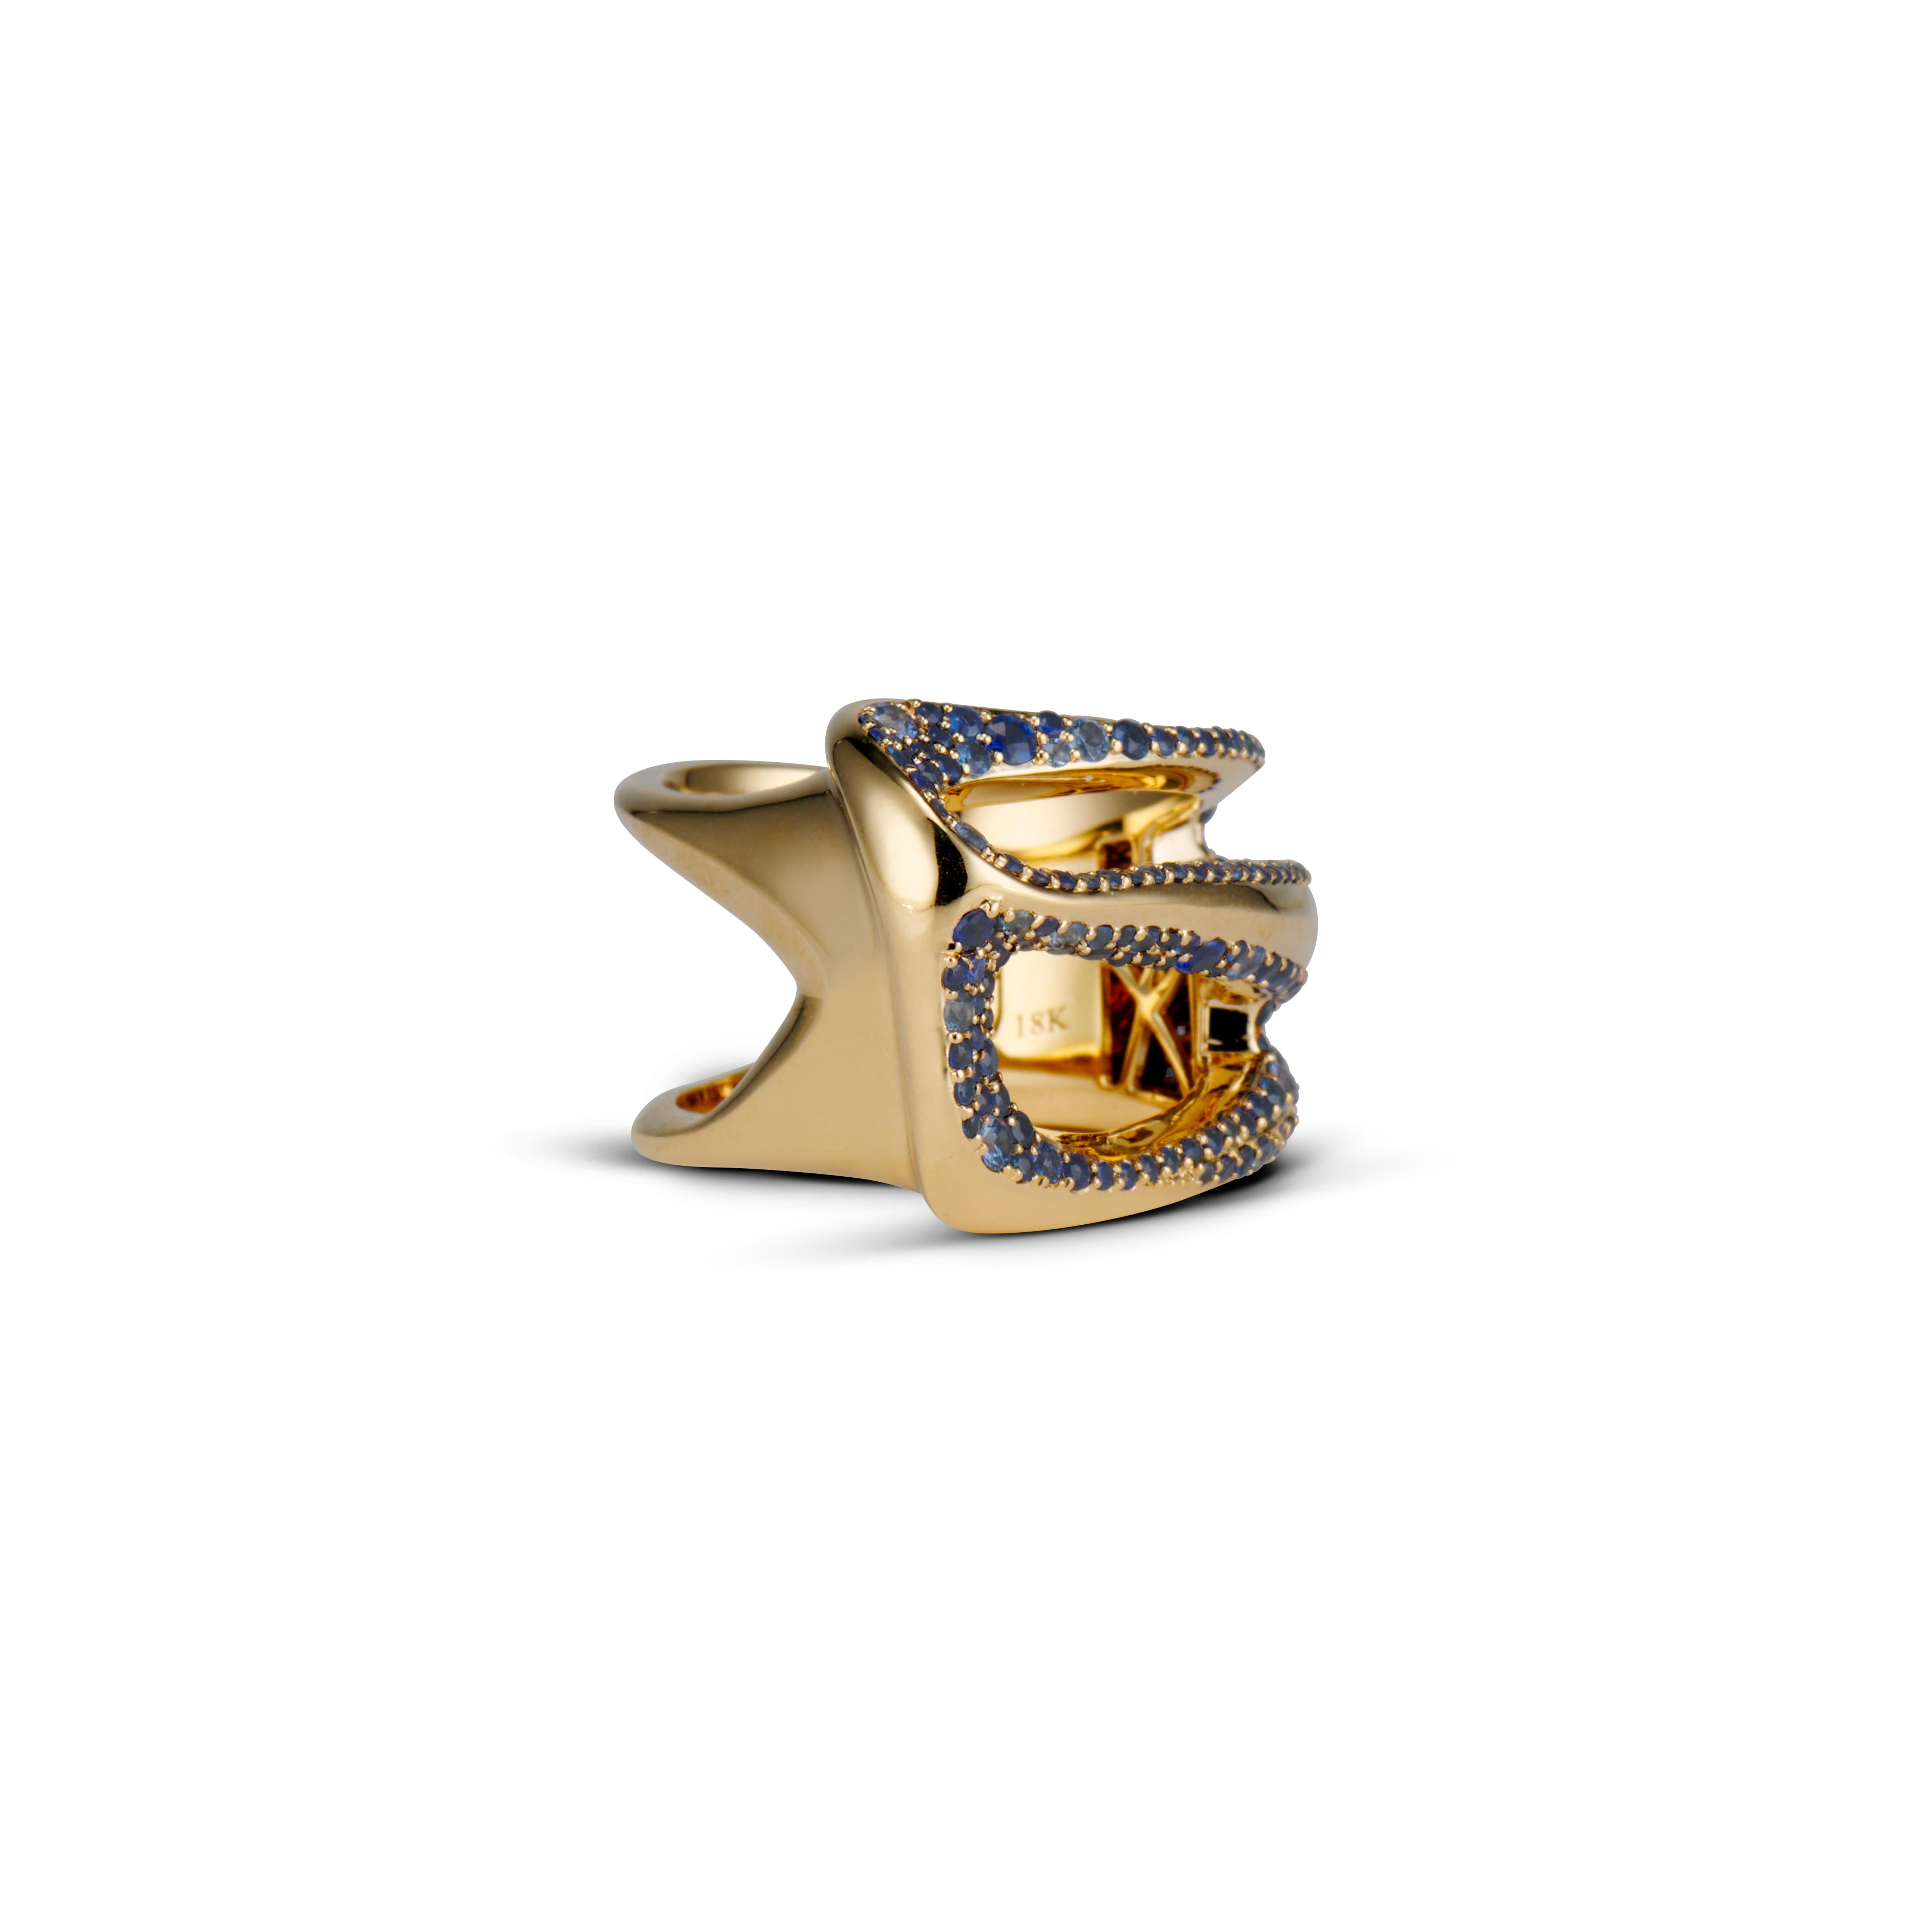 JV Insardi 18 Karat Gold Sculptural Ring with Blue Sapphires 3